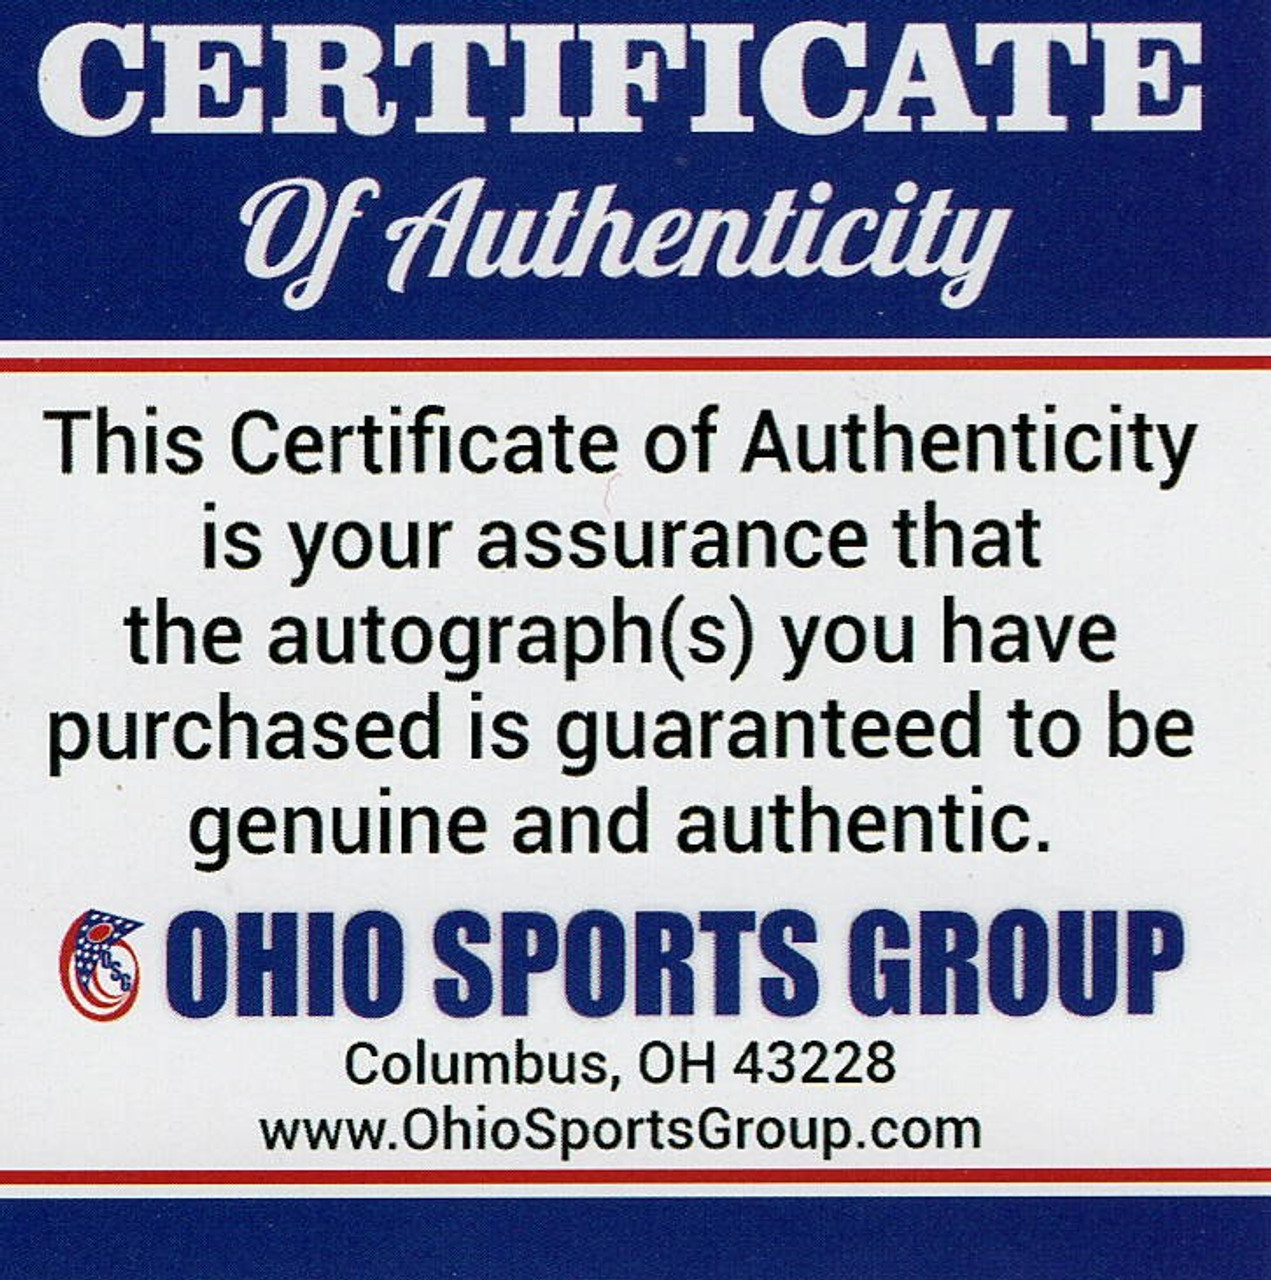 Turkey Jones Cleveland Browns 16-8 16x20 Autographed Photo - Certified Authentic16-001819